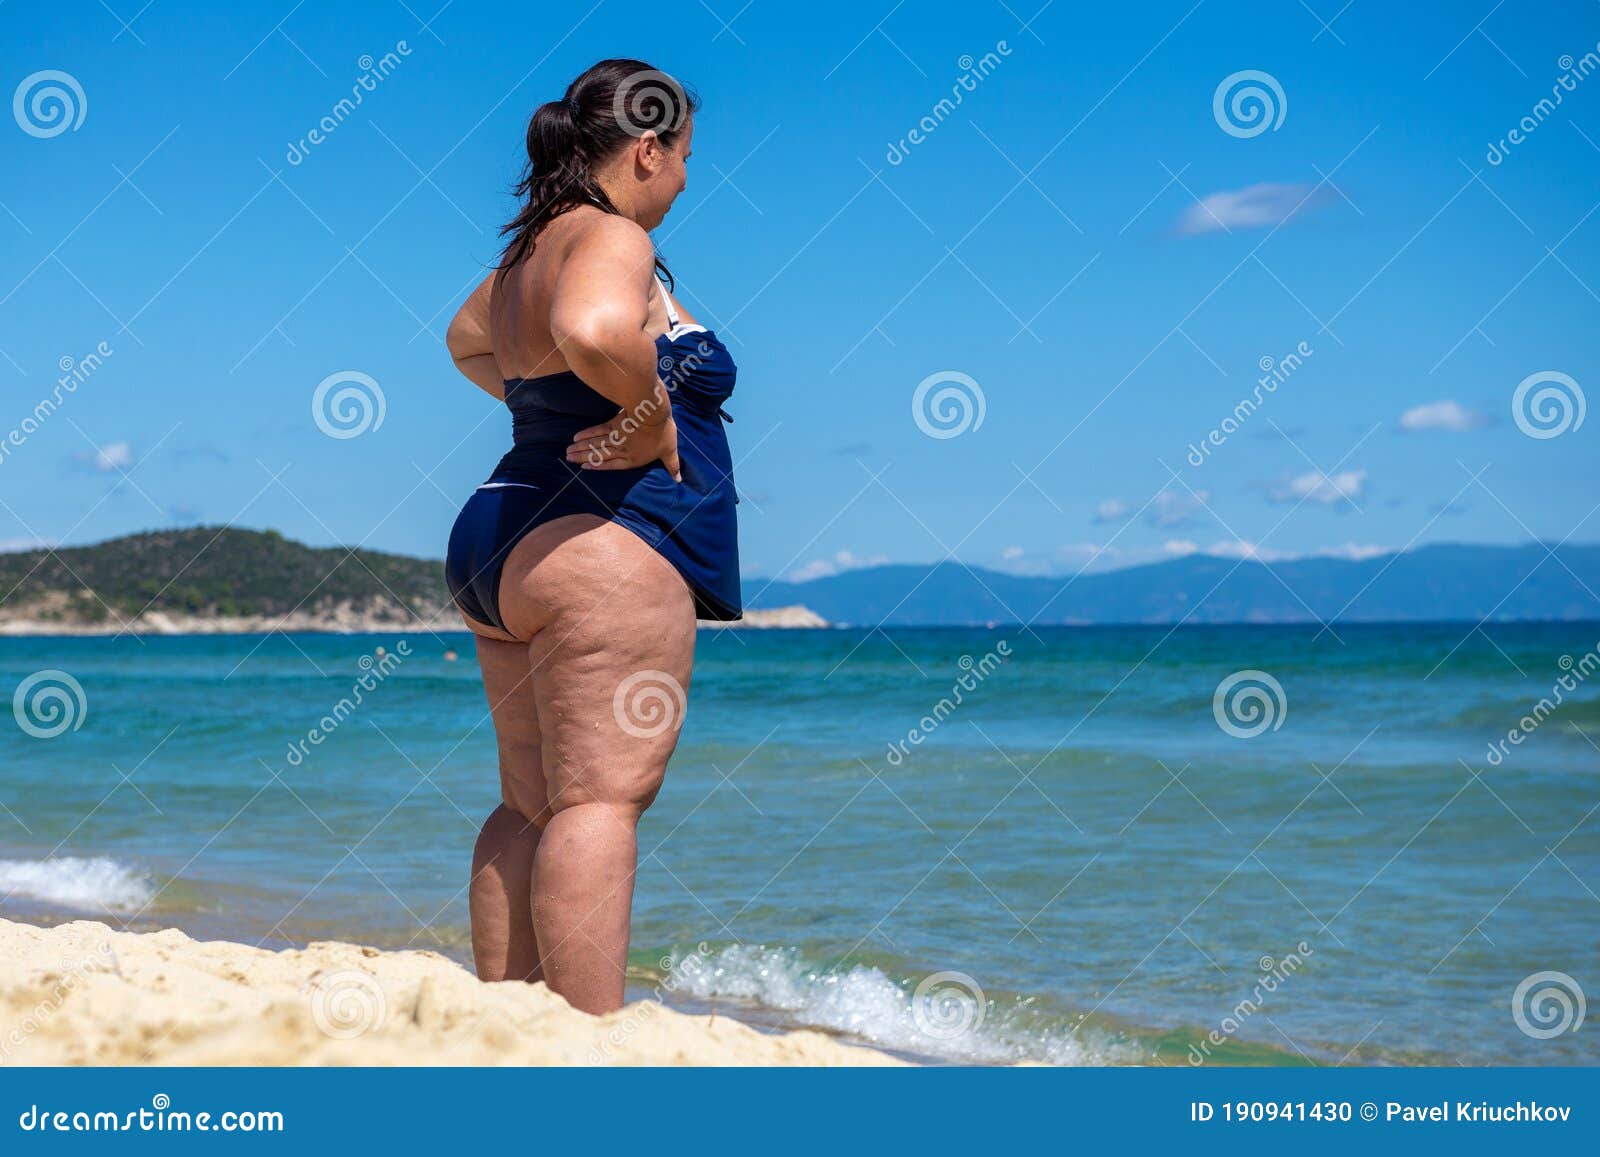 Nude Woman Beach